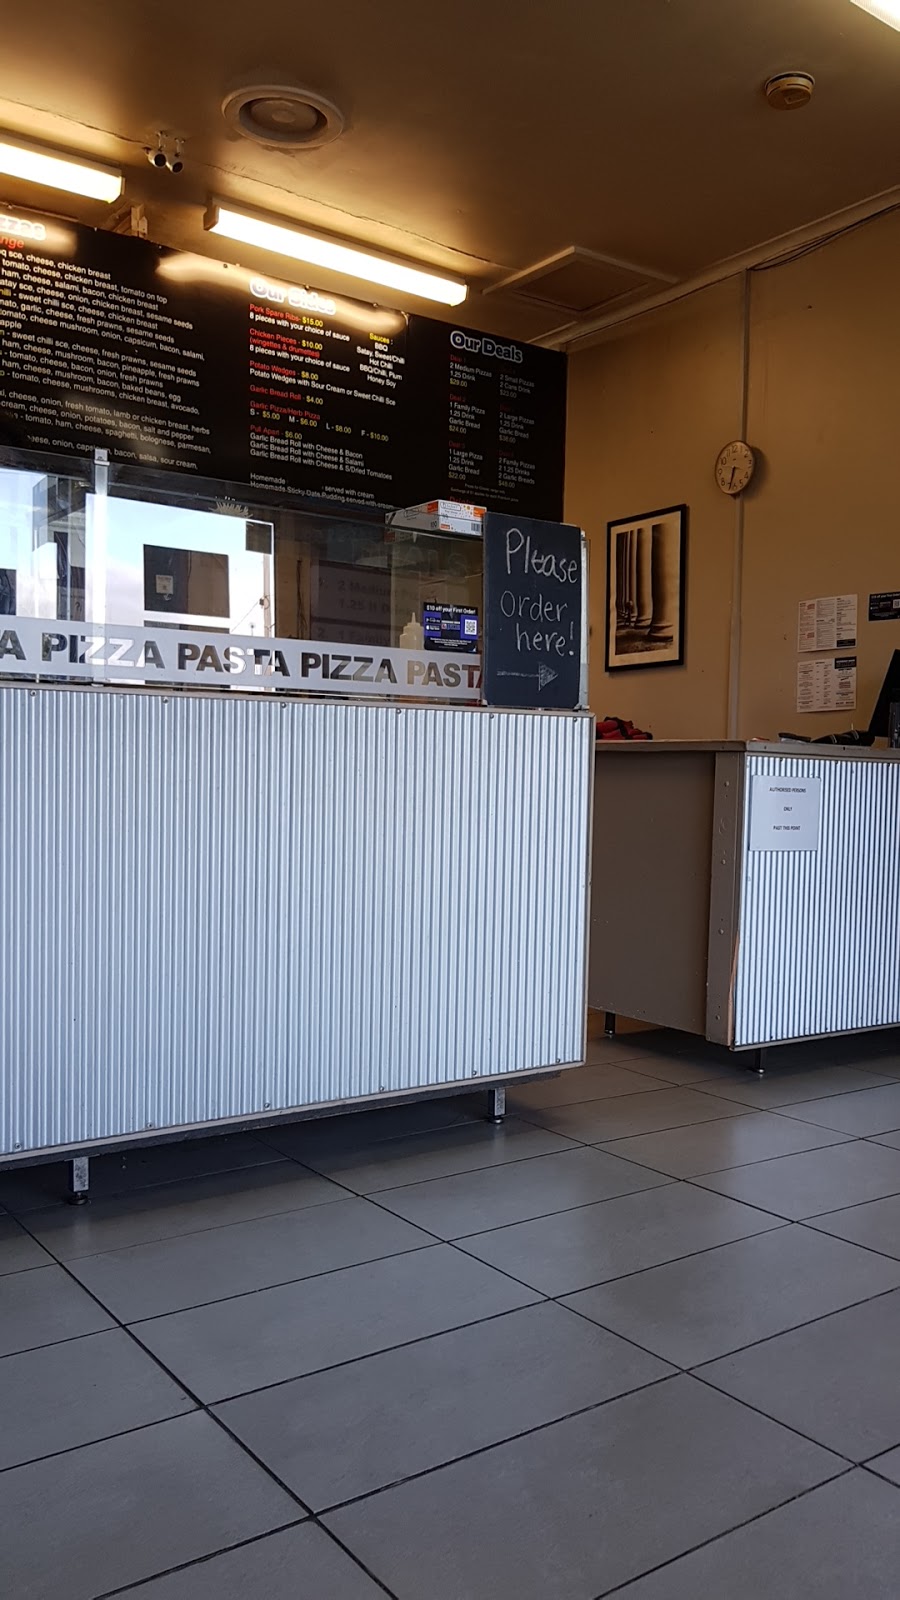 Boundary Road Pizza & Pasta | restaurant | 166 Boundary Rd, Thomson VIC 3219, Australia | 0352484033 OR +61 3 5248 4033